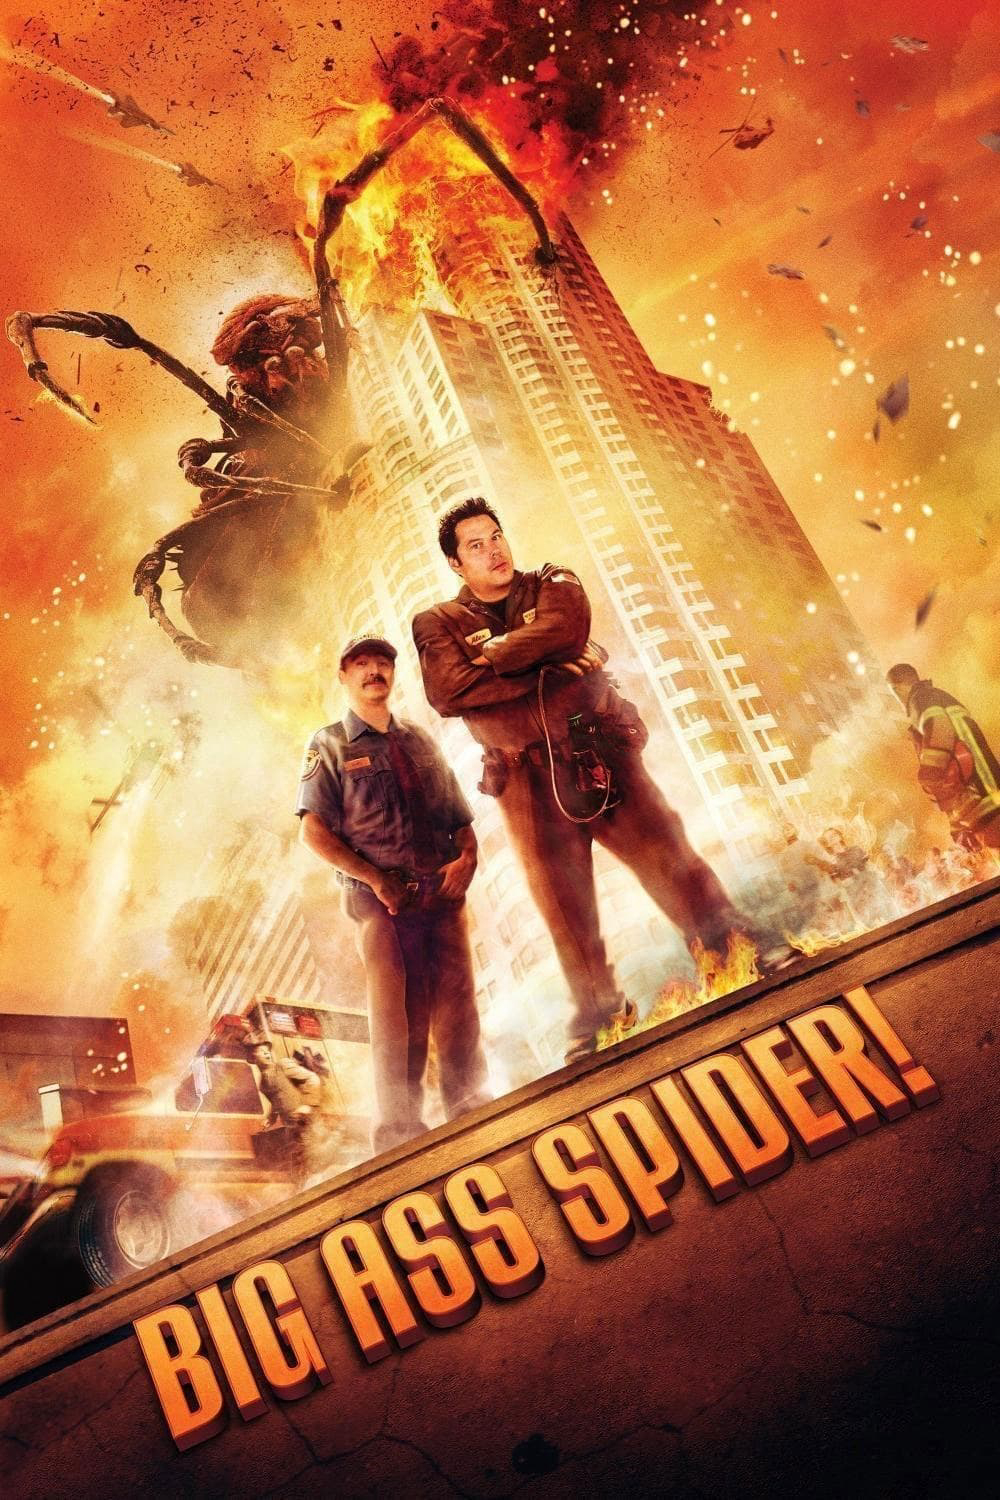 Nhện Mông To (Big Ass Spider!) [2013]